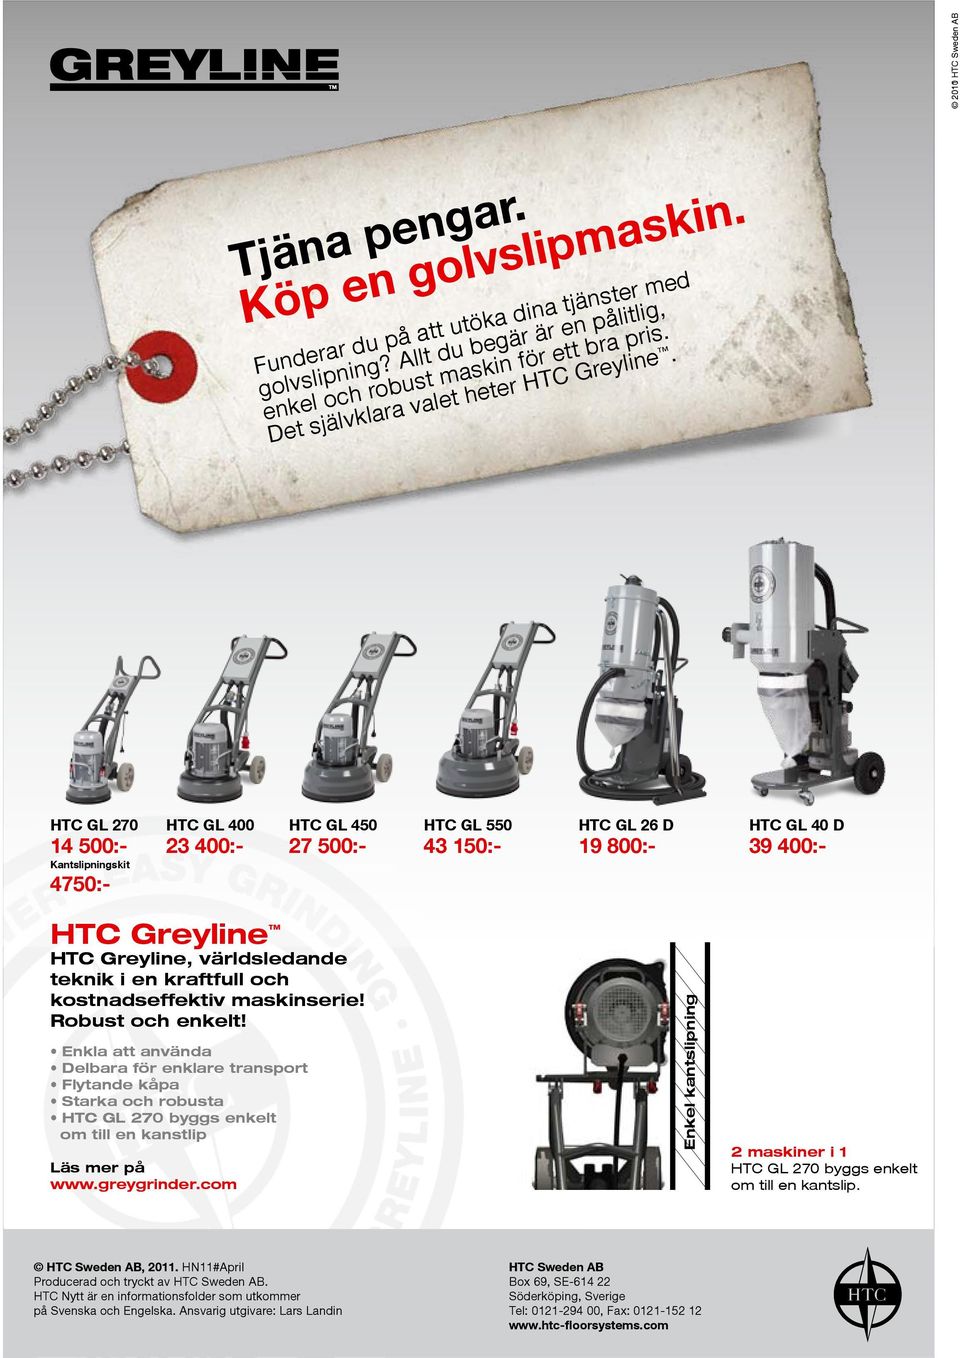 HTC GL 270 14 500:- Kantslipningskit 4750:- HTC GL 400 23 400:- HTC GL 450 27 500:- HTC GL 550 43 150:- HTC GL 26 D 19 800:- HTC GL 40 D 39 400:- HTC Greyline HTC Greyline, världsledande teknik i en